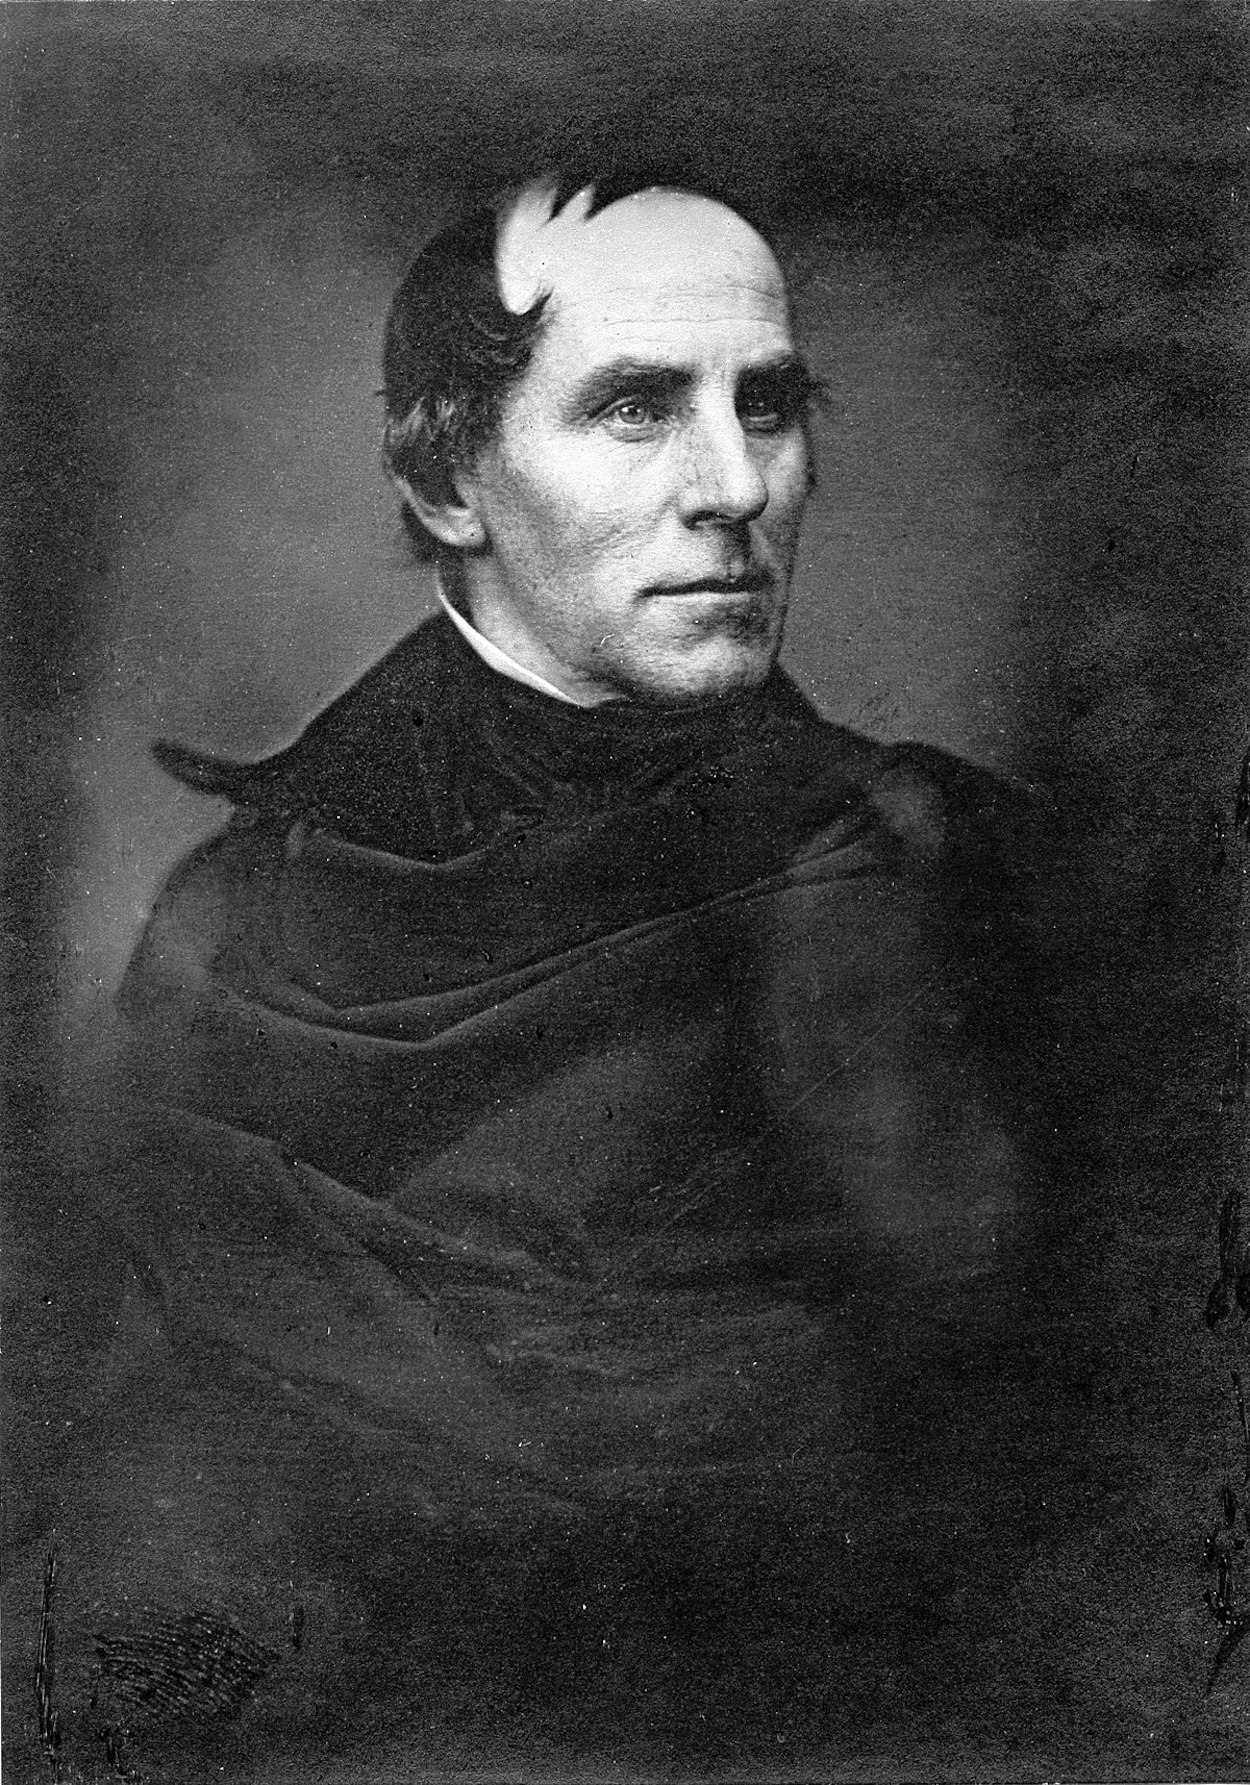 Thomas Cole - 1 Februari, 1801 - Februari 11, 1848